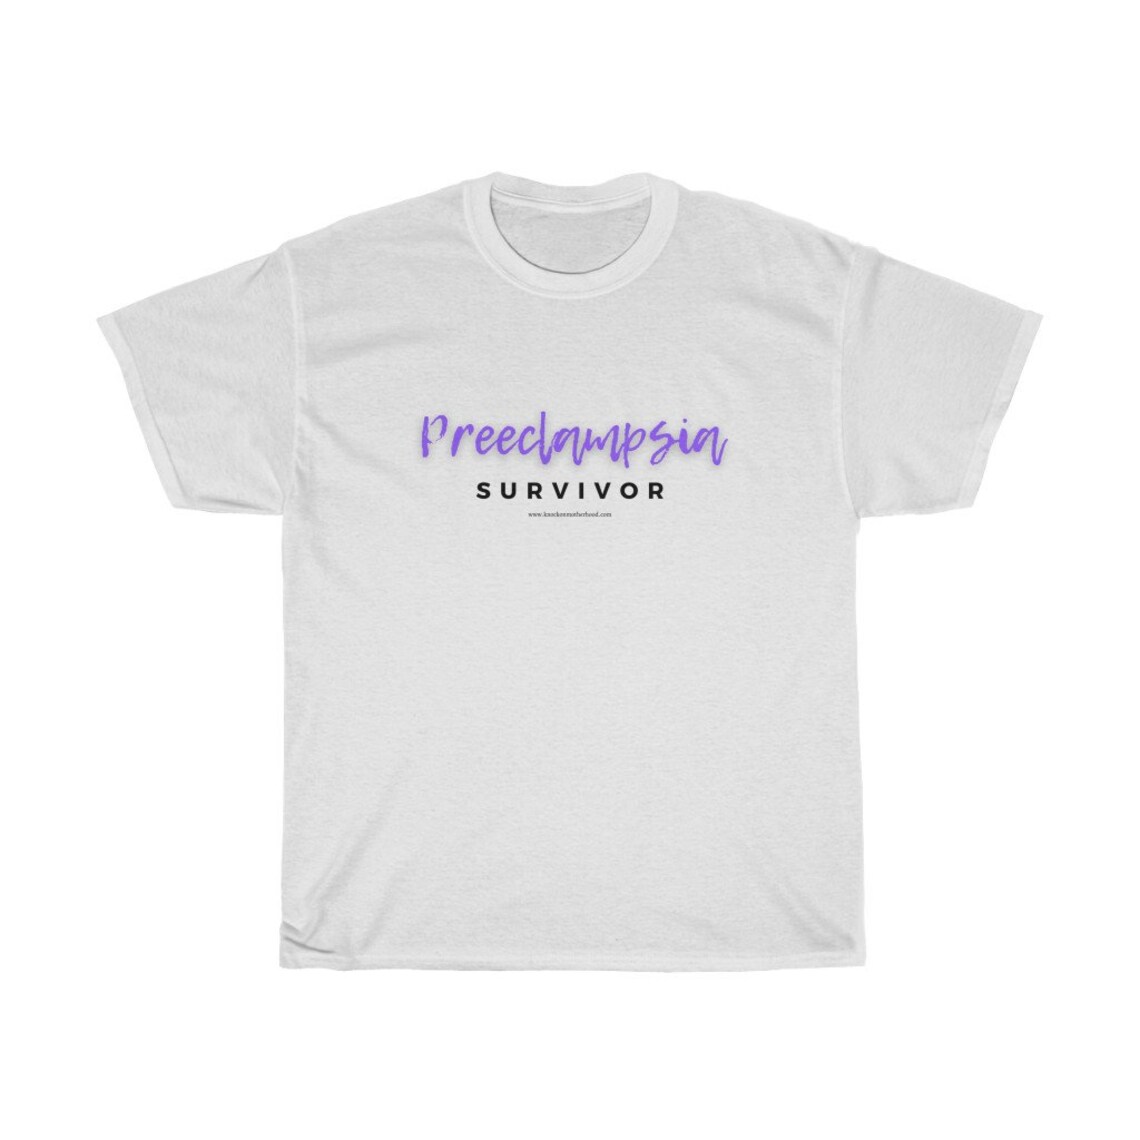 Preeclampsia Survivor T-Shirt image 0